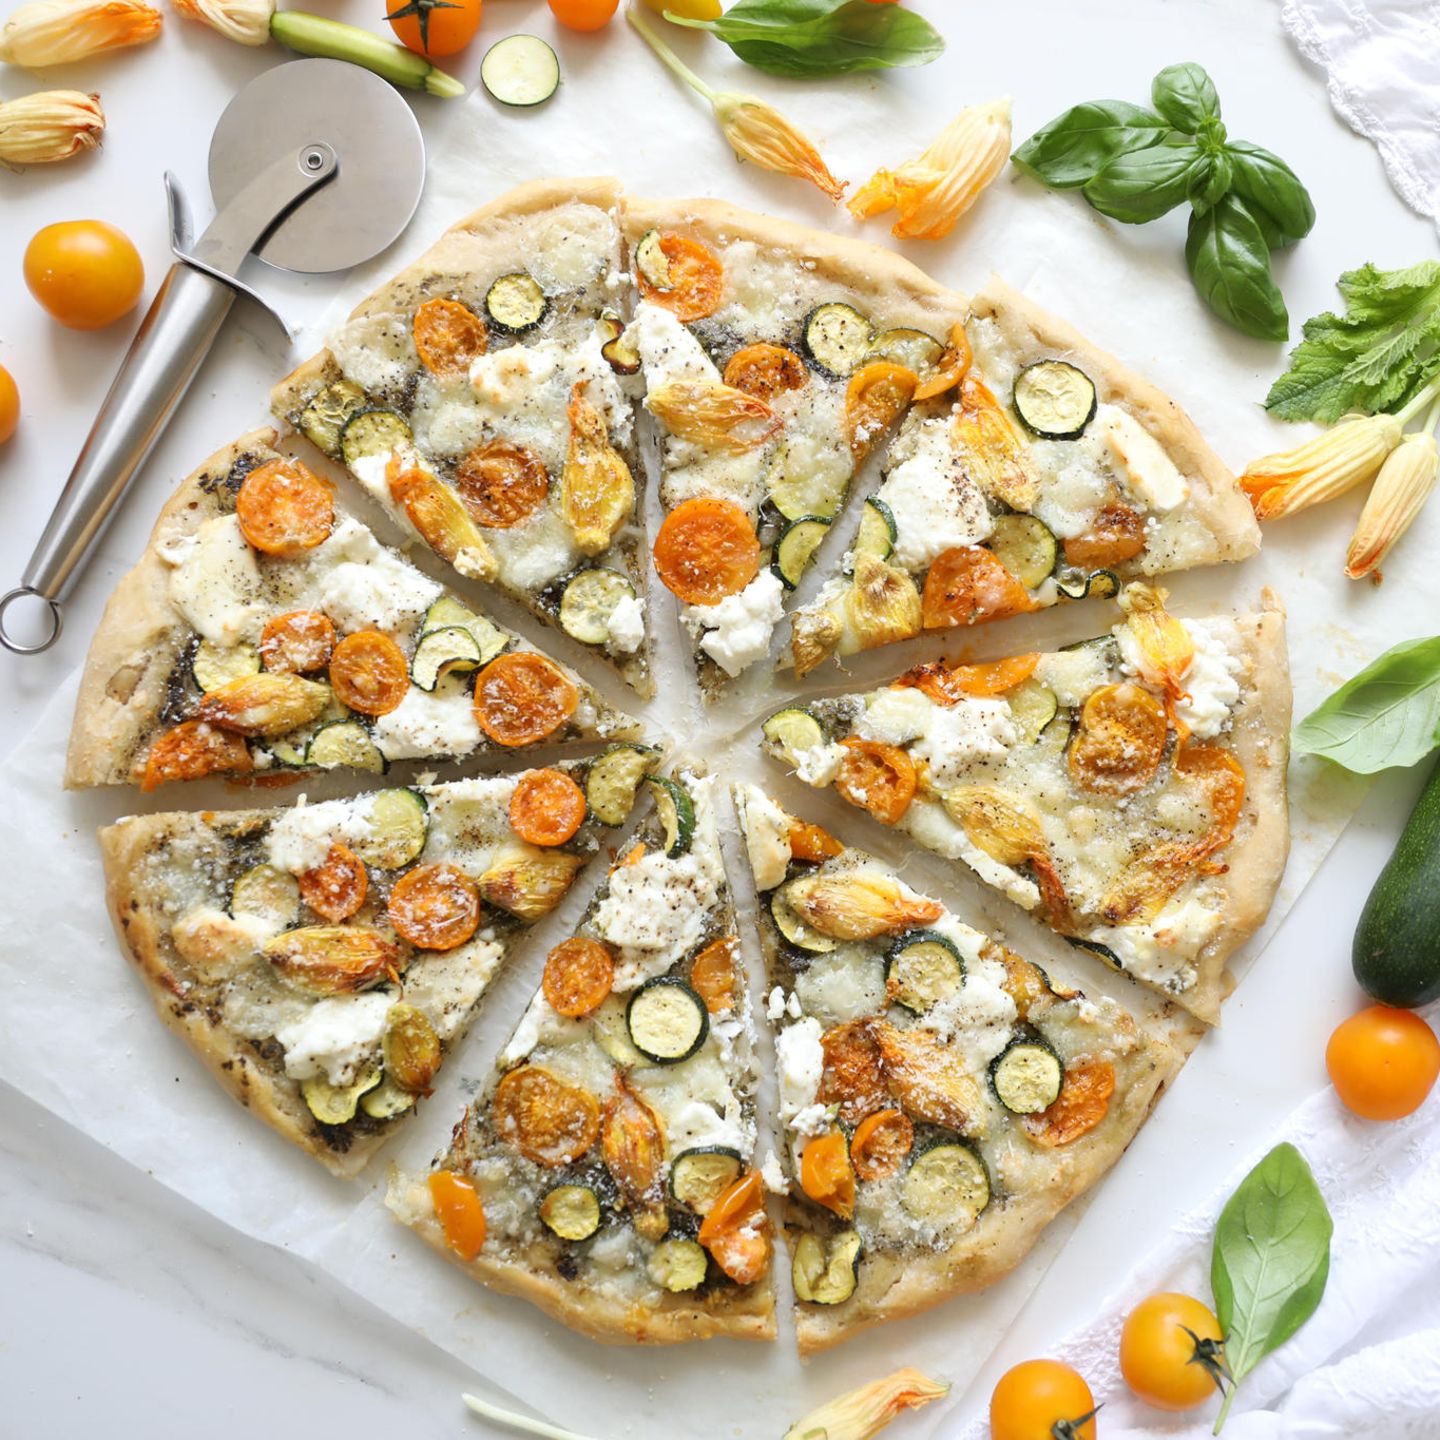 Gesunde Pizza selber machen: So geht die leckere Alternative | GALA.de